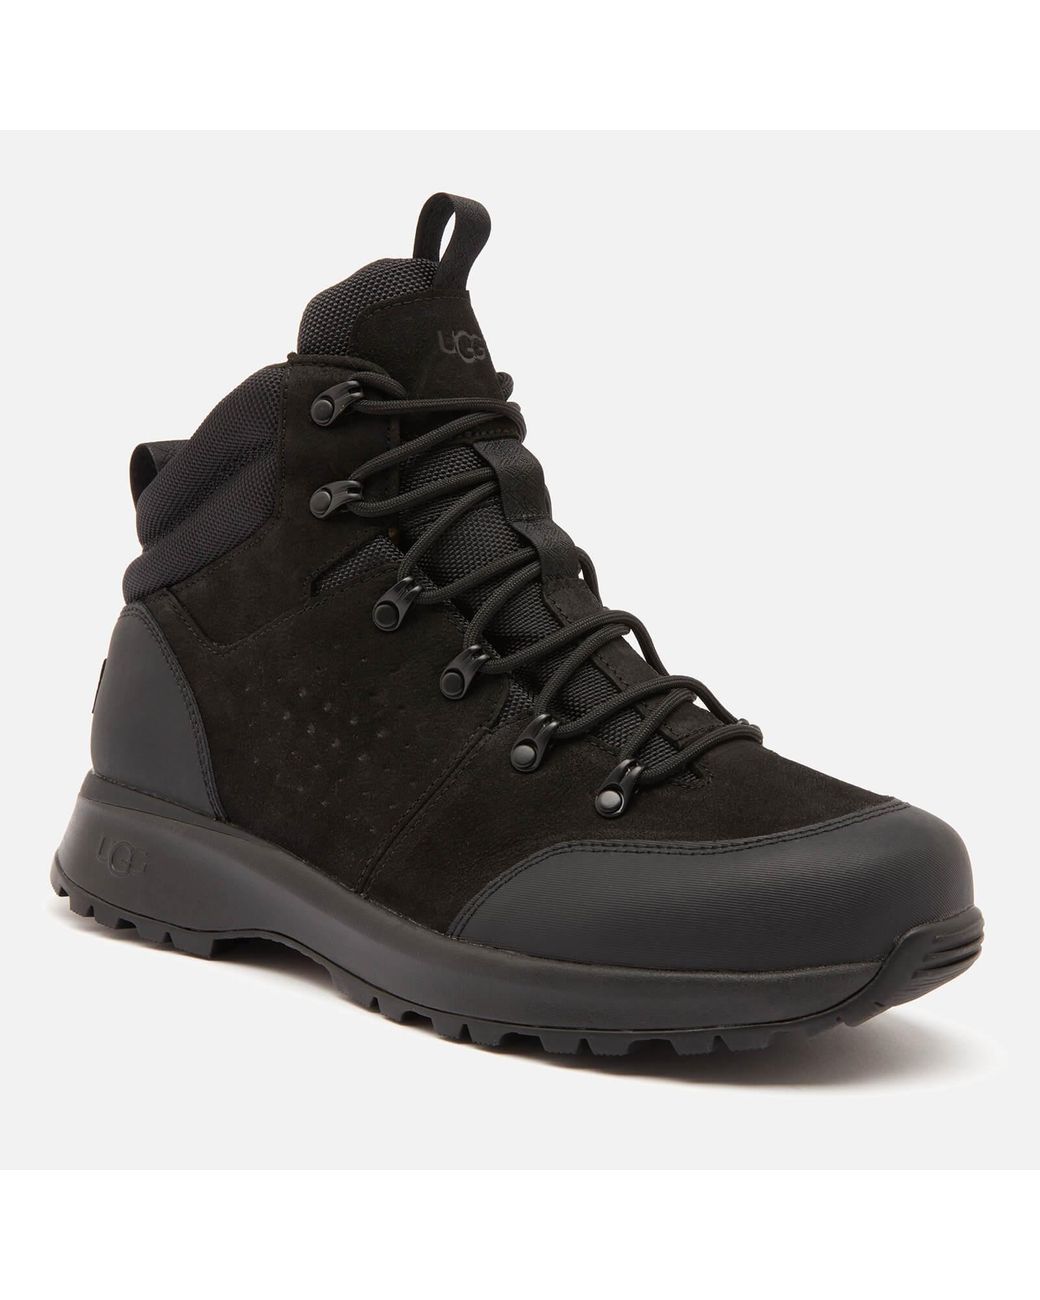 UGG Emmett Waterproof Leather Hiking Style Boots in Black for Men - Lyst